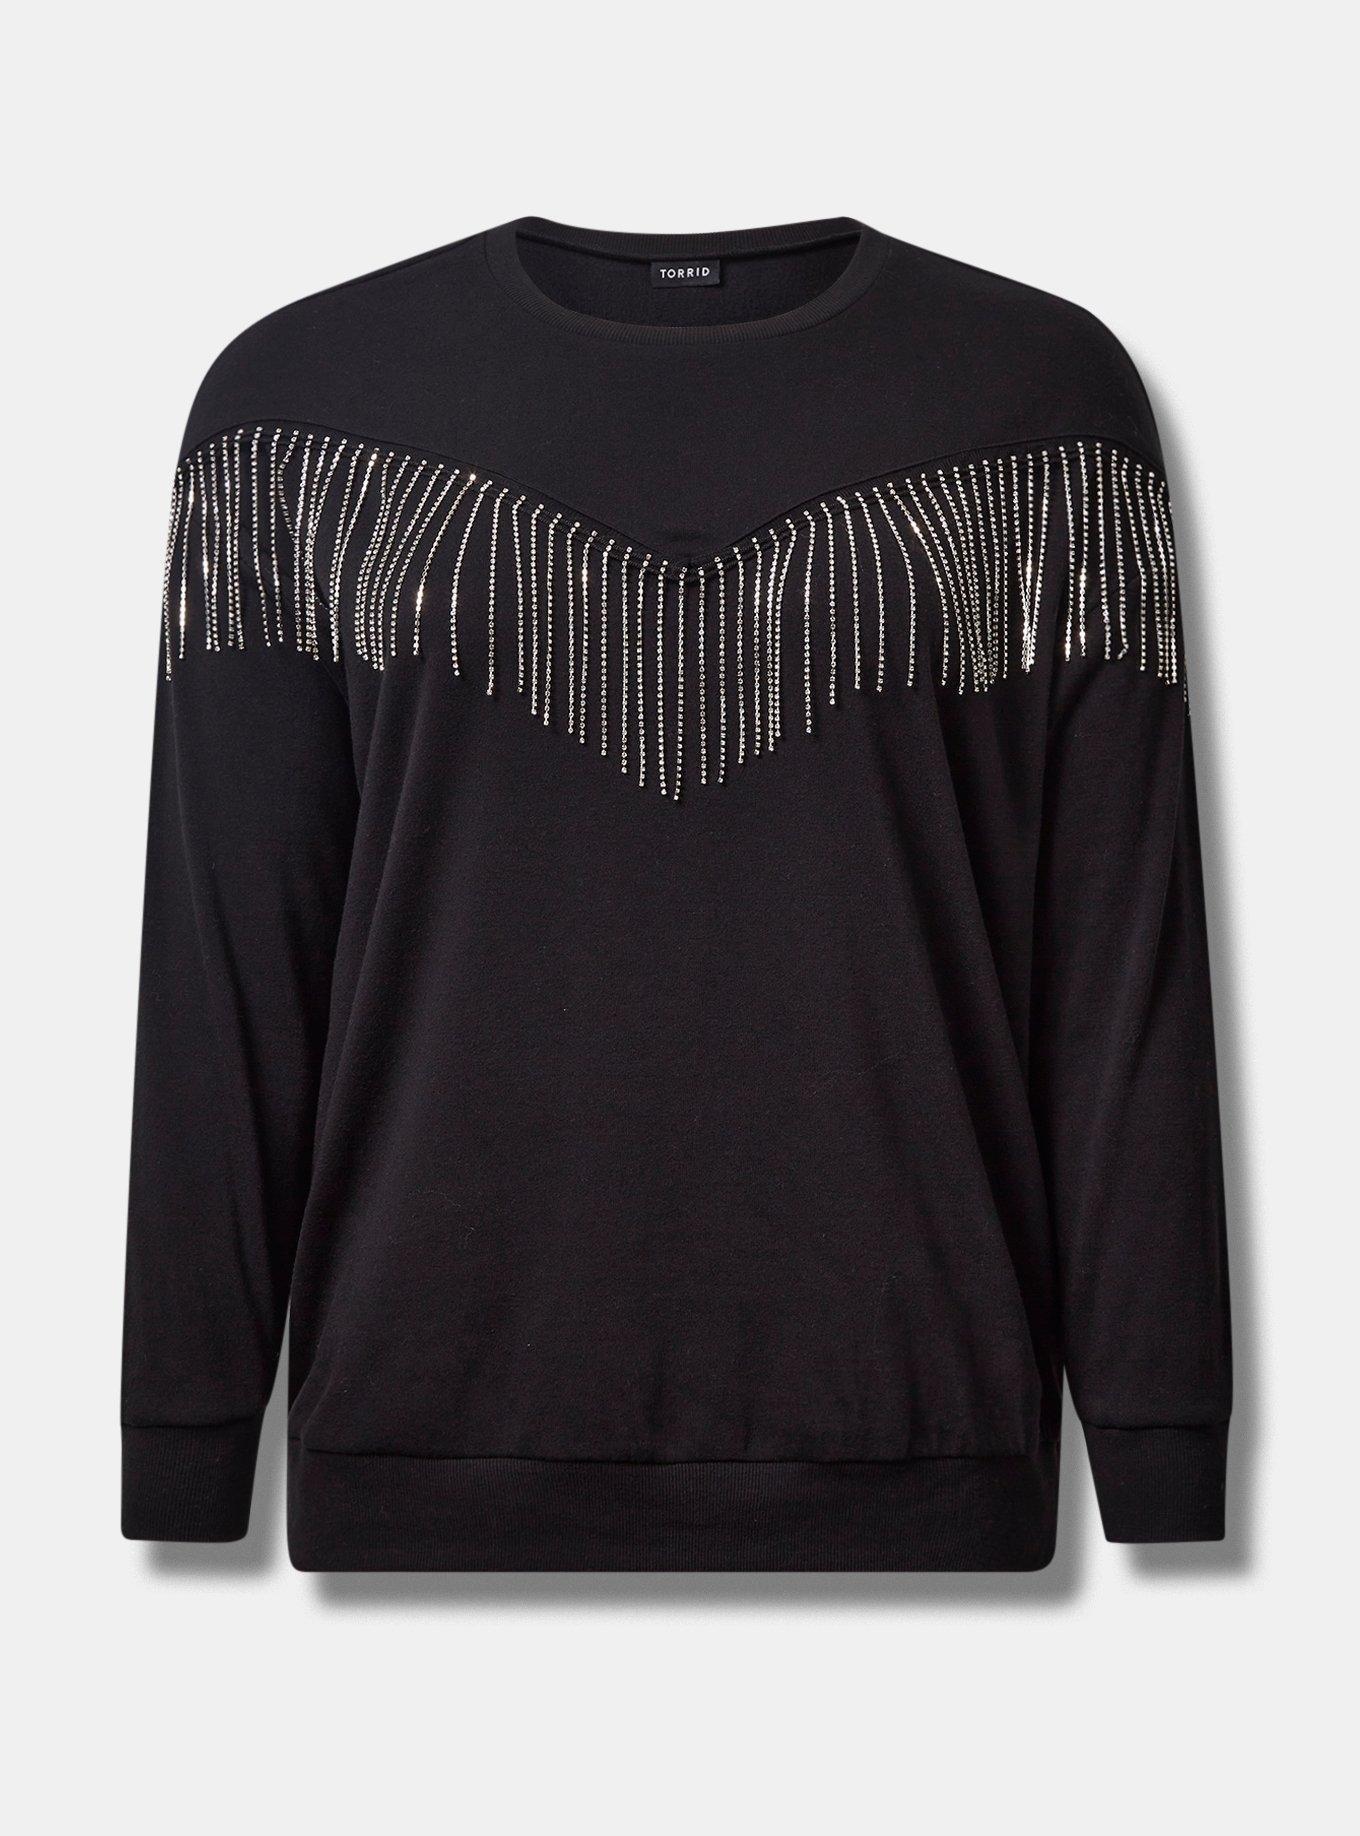 Rhinestone Black Fringe Sweatshirt